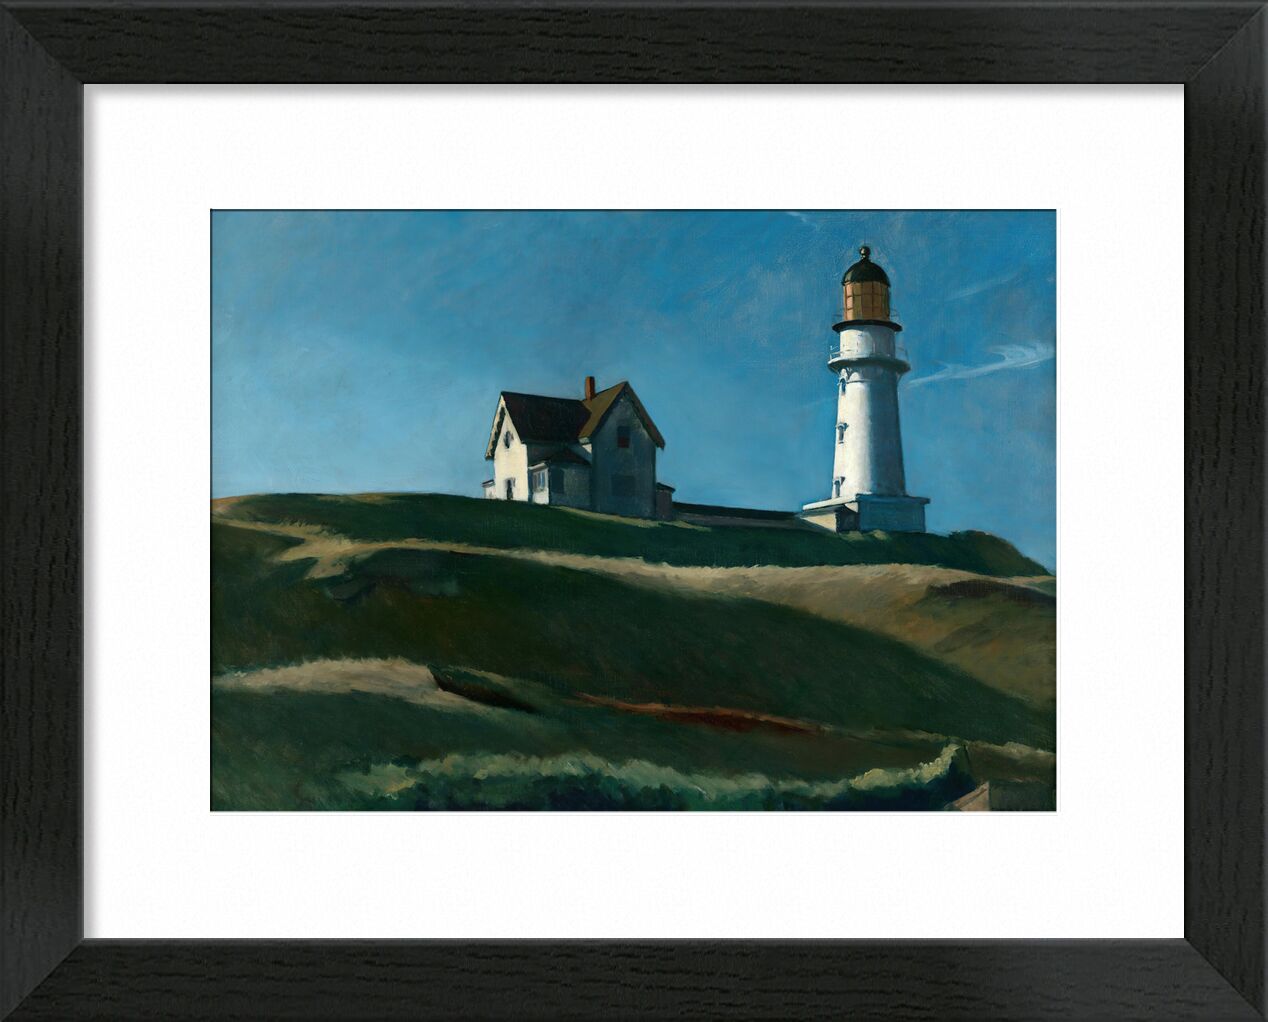 Colina del Faro - Edward Hopper desde Bellas artes, Prodi Art, Edward Hopper, faro, colinas, paisaje, prado